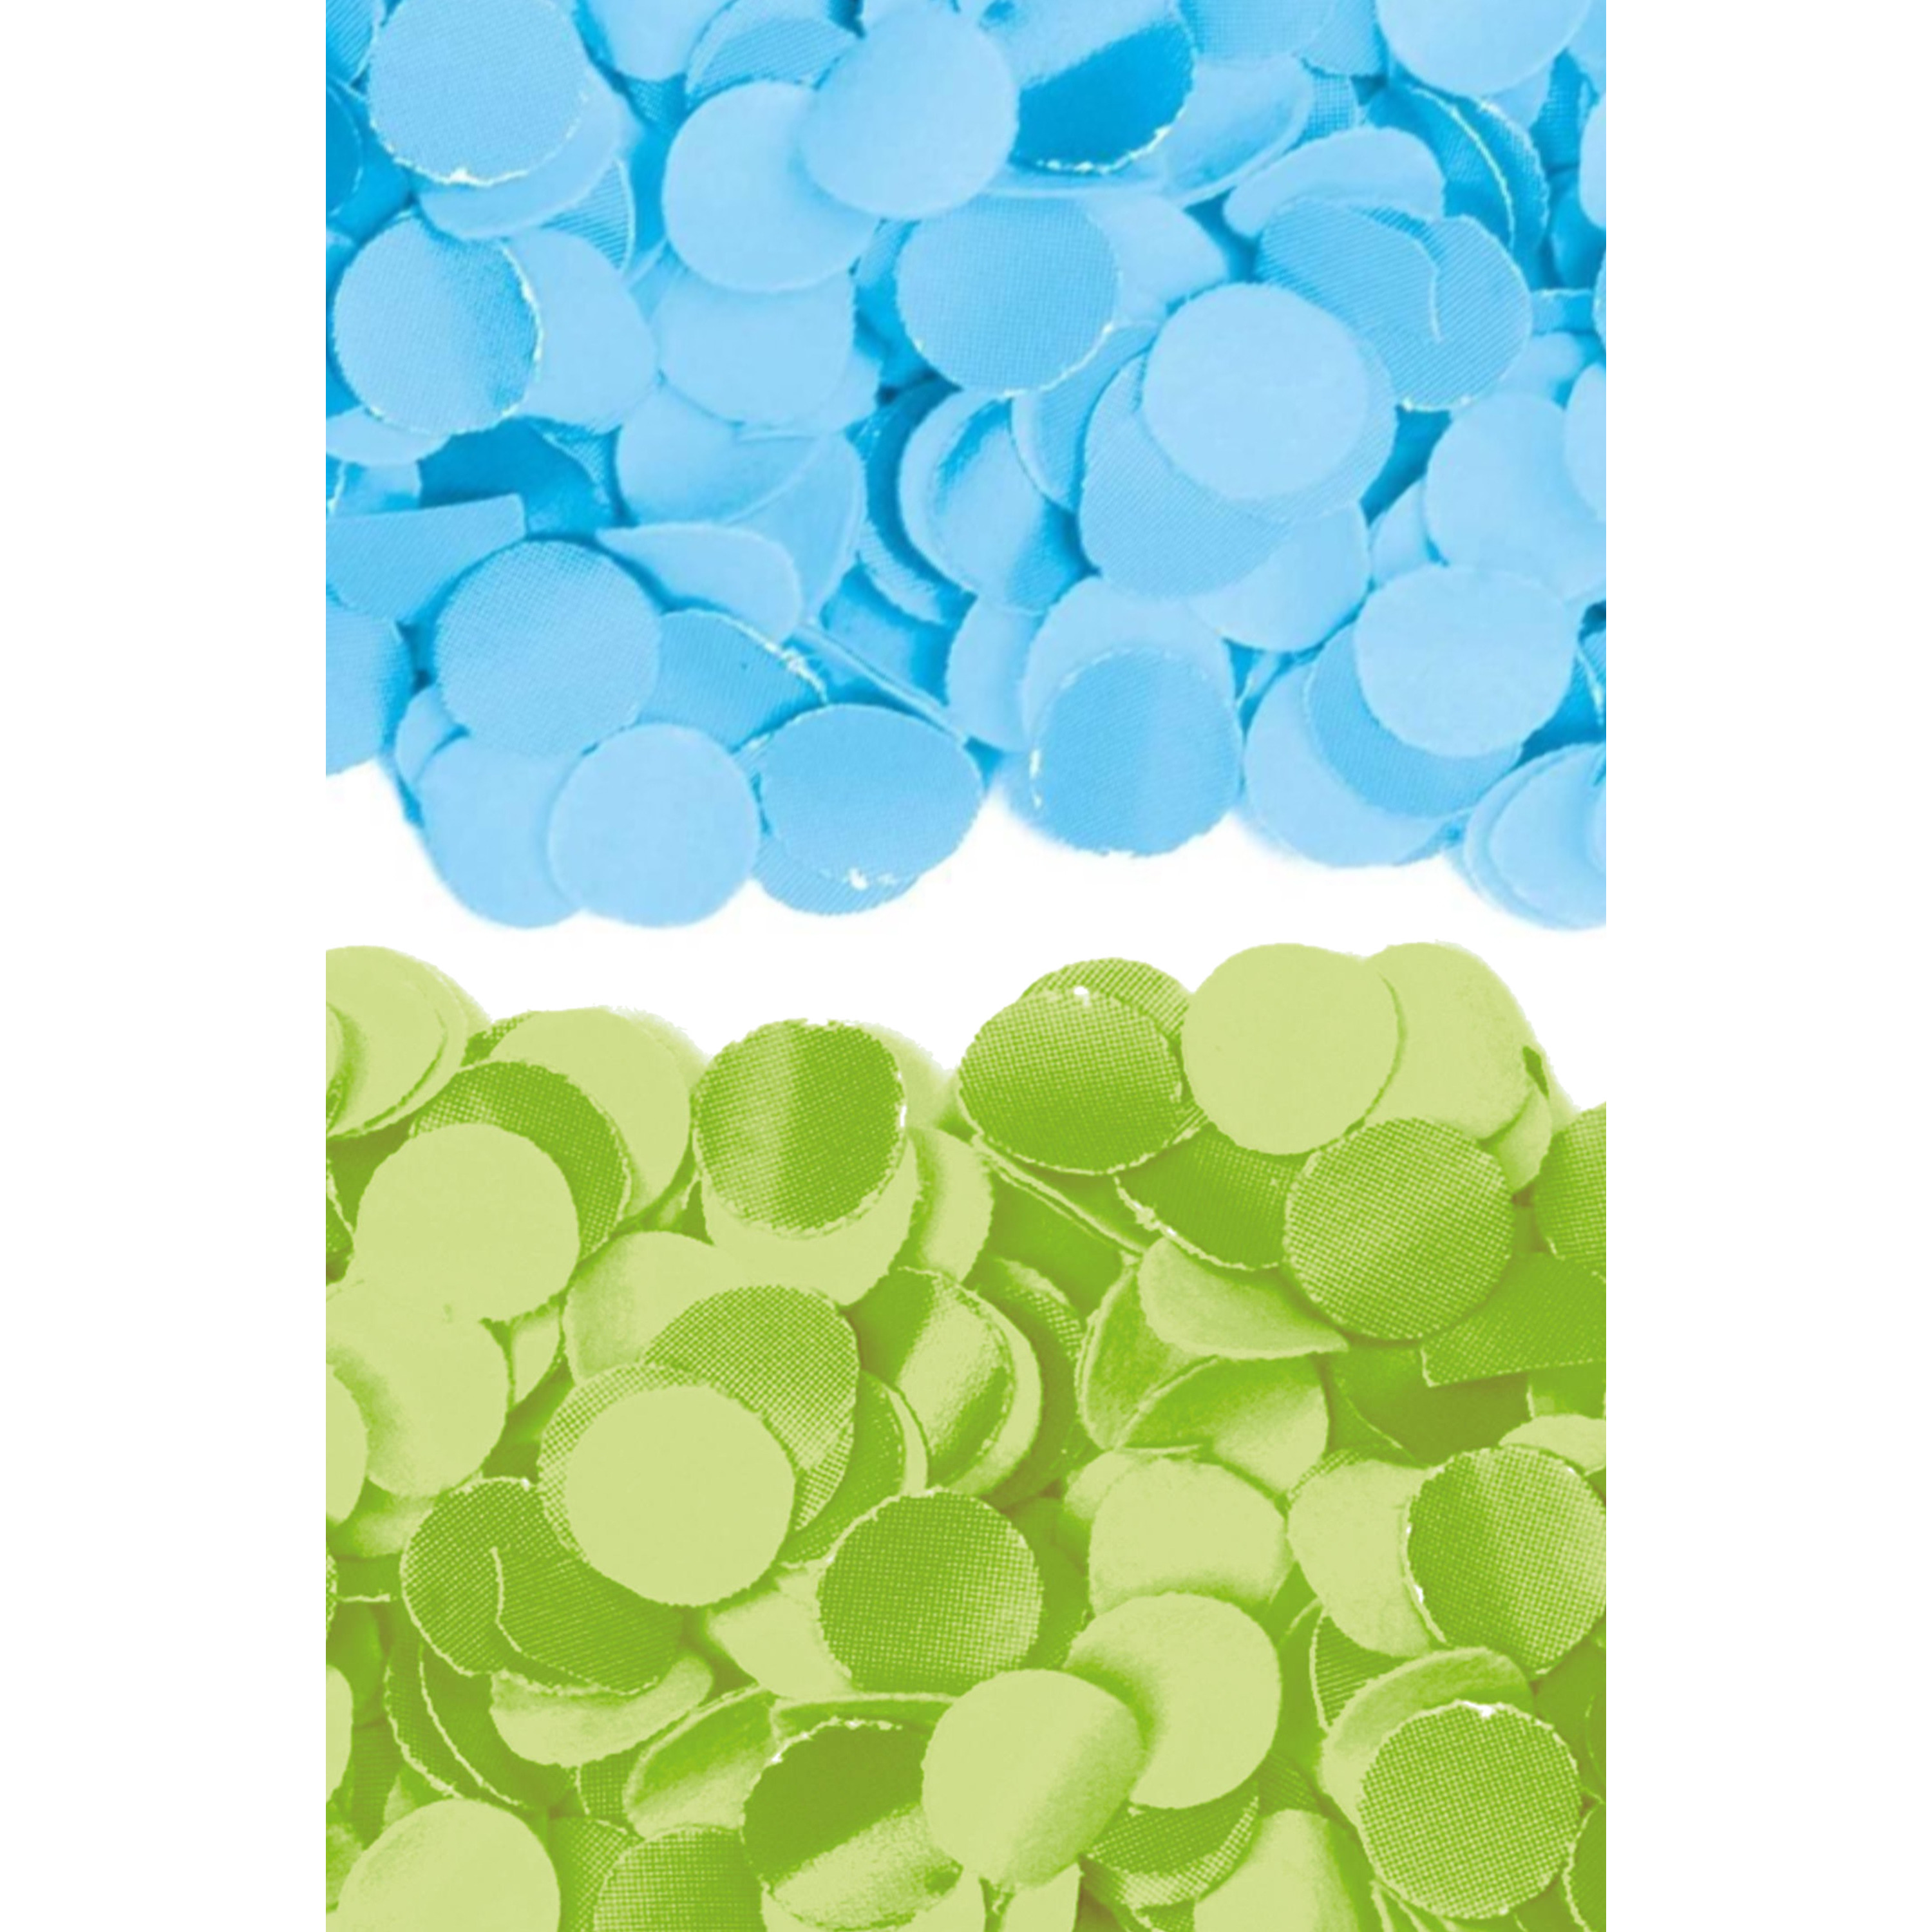 600 gram groen en blauwe papier snippers confetti mix set feest versiering